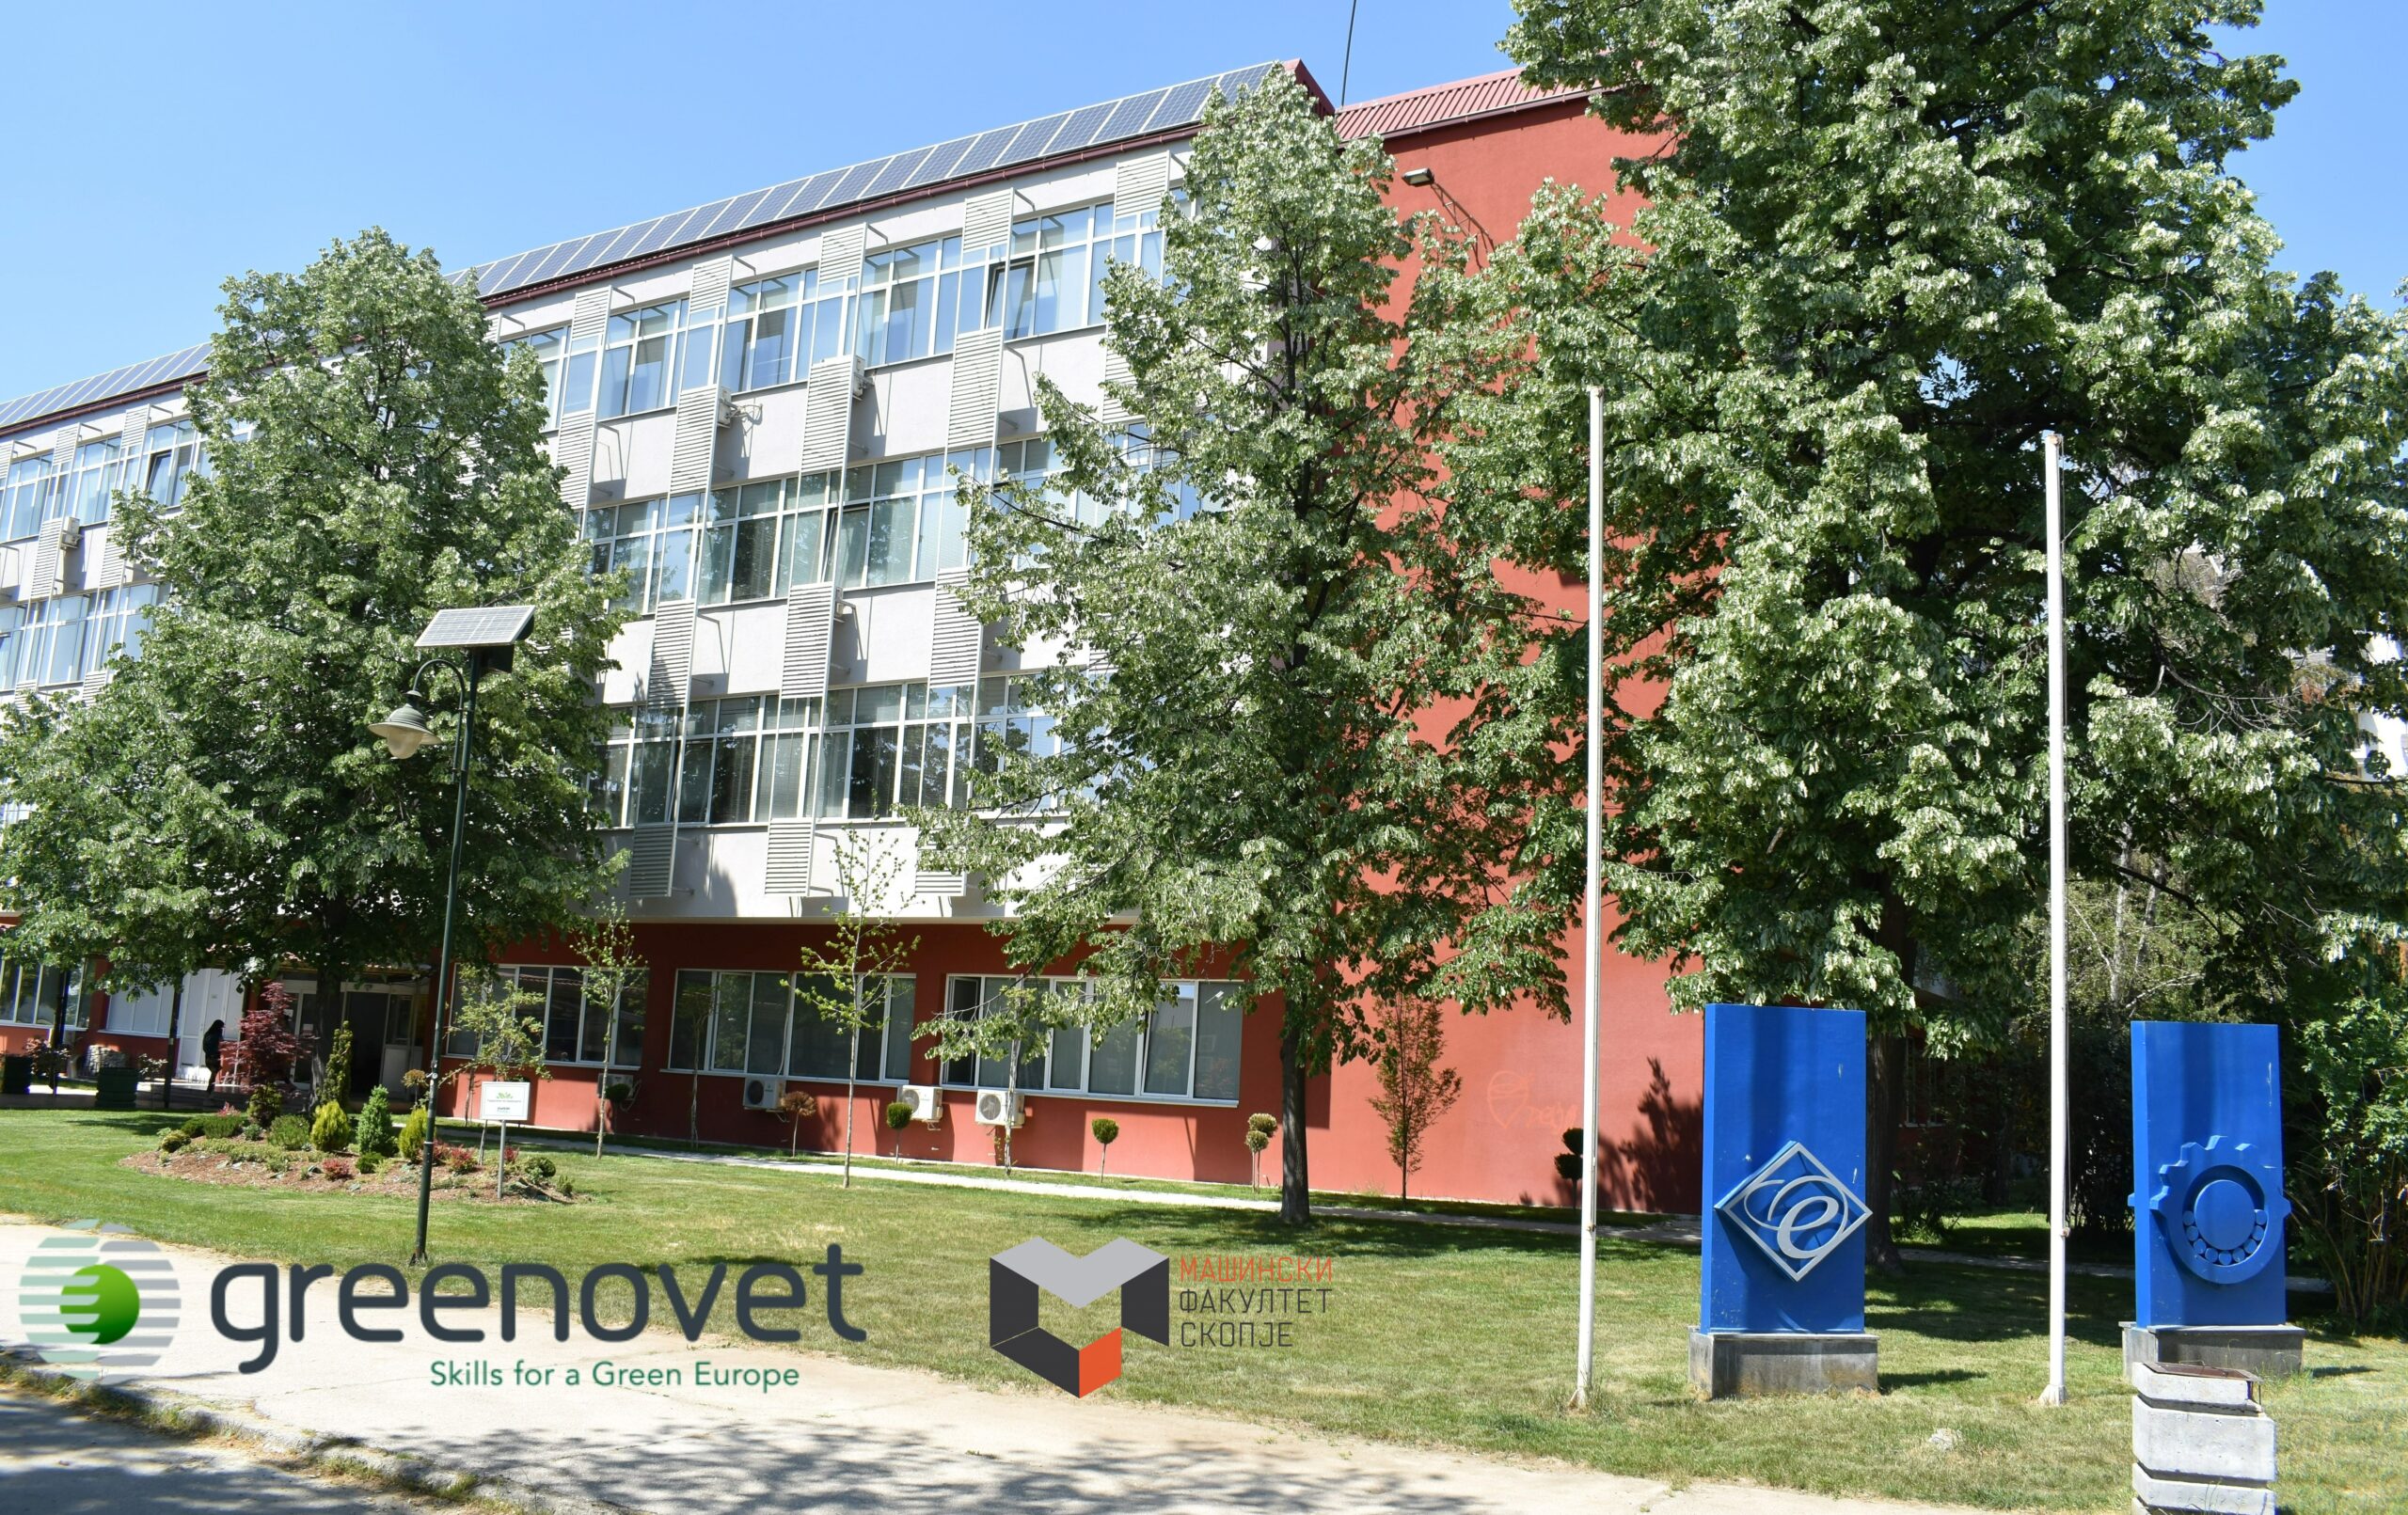 Скопје доби регионален Центар за извонредност на стручно образование и зелени иновации